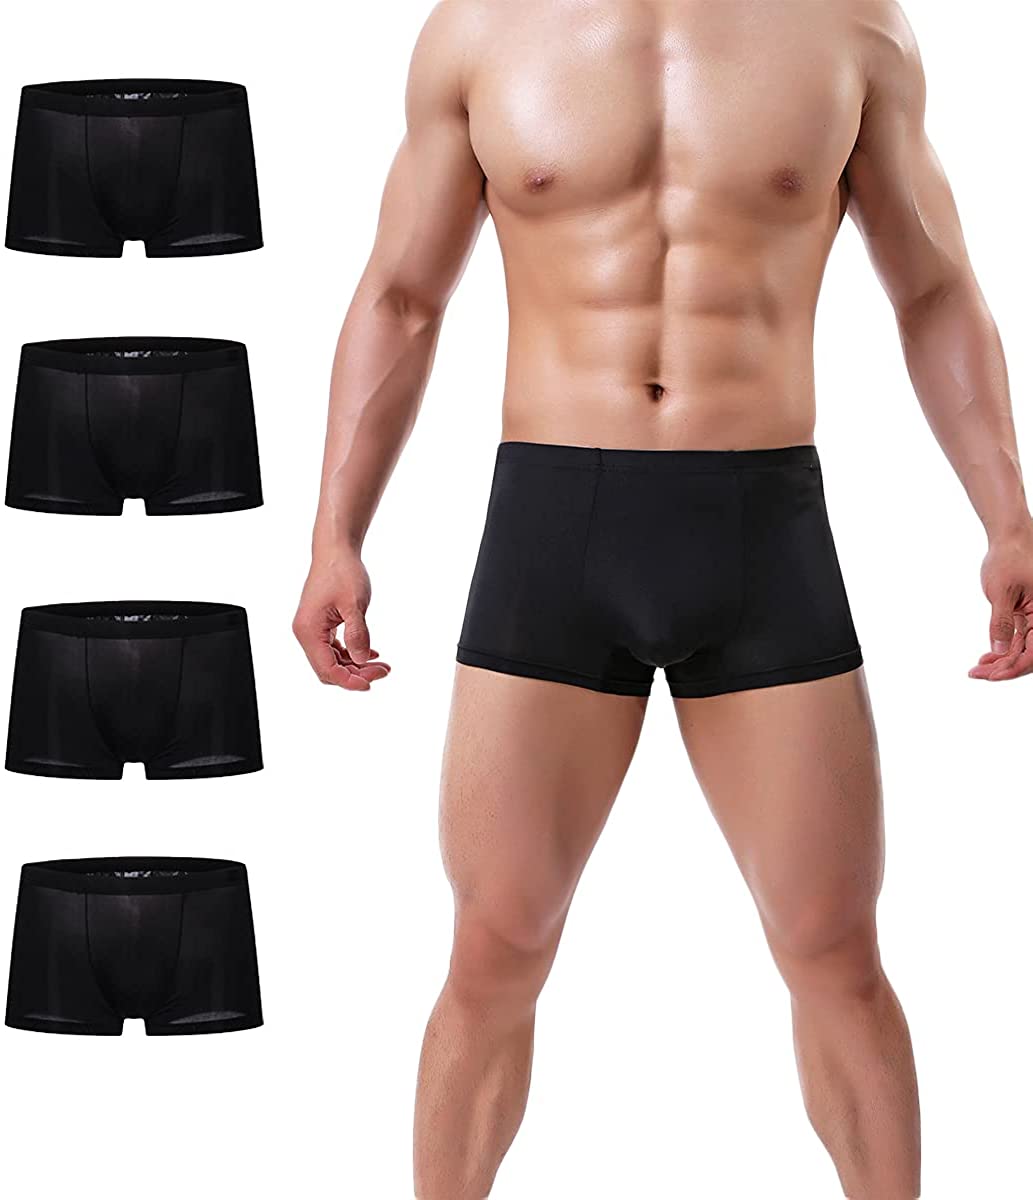 YuKaiChen Mens Modal Trunks Underwear Elephant Bulge Lingerie Boxer Briefs Short Leg